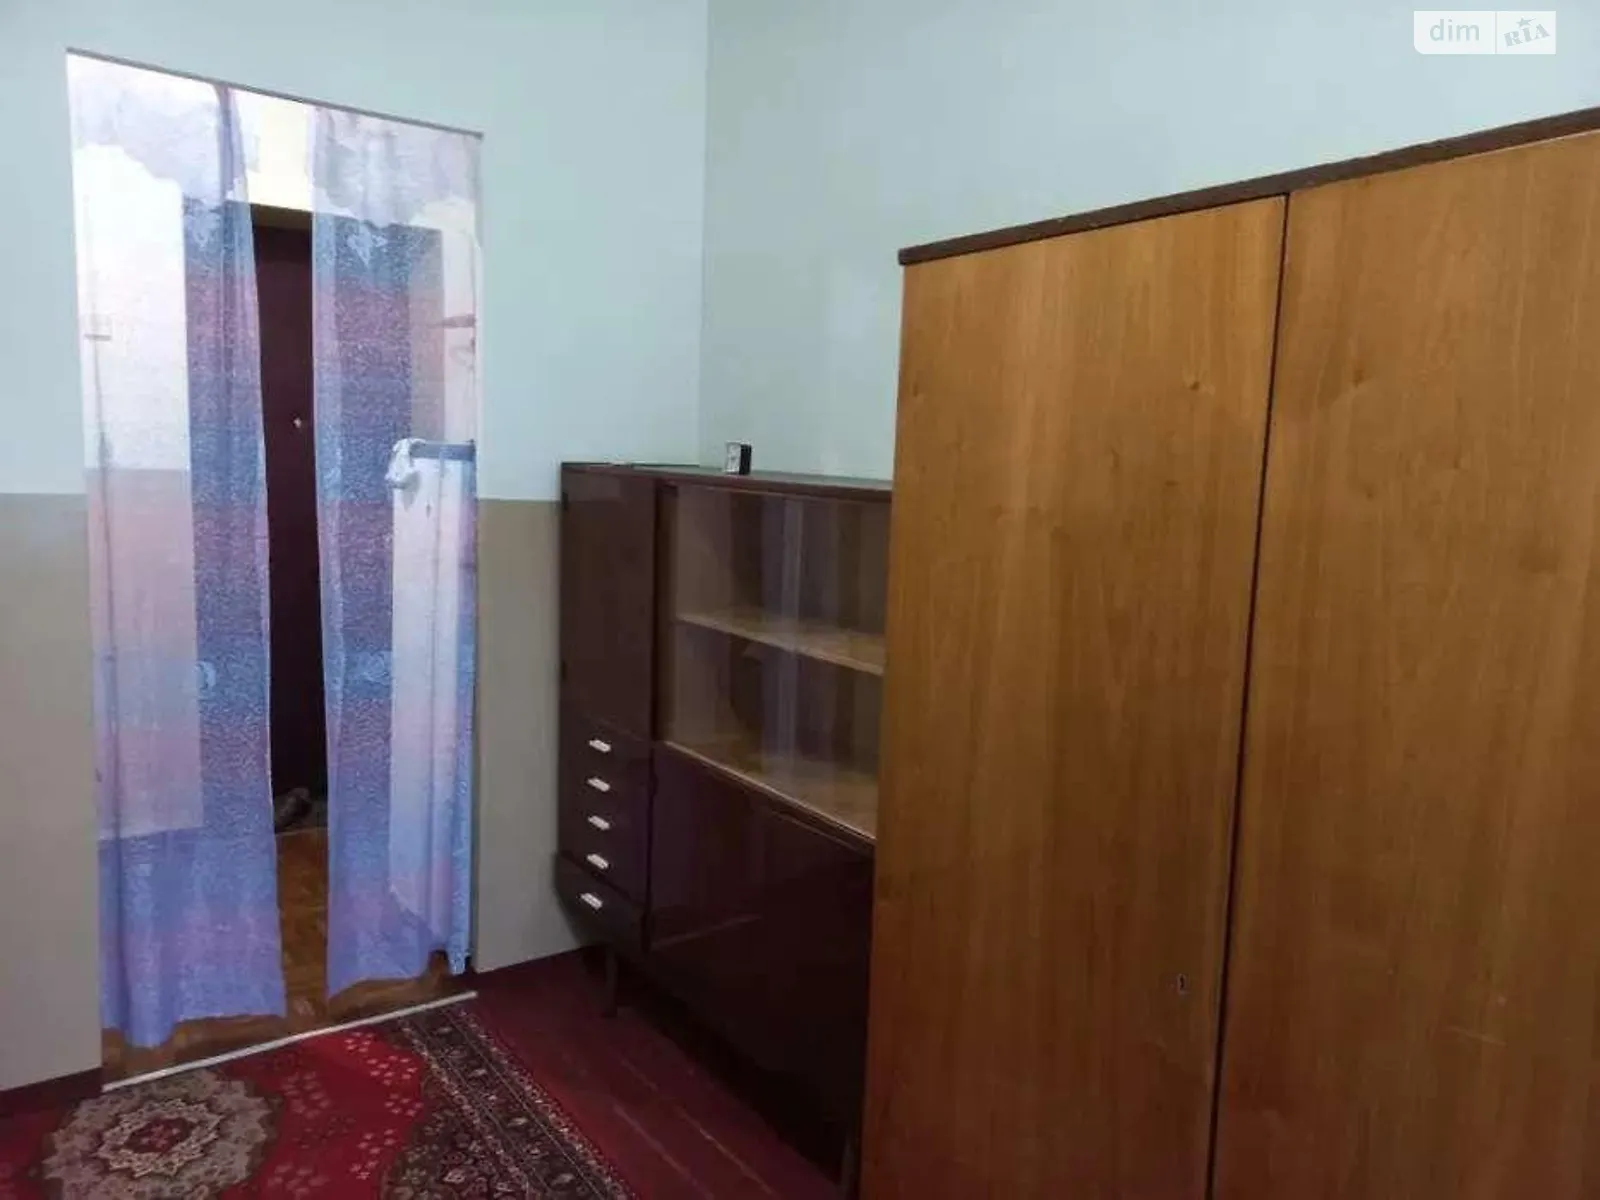 Продается комната 35 кв. м в Харькове - фото 3